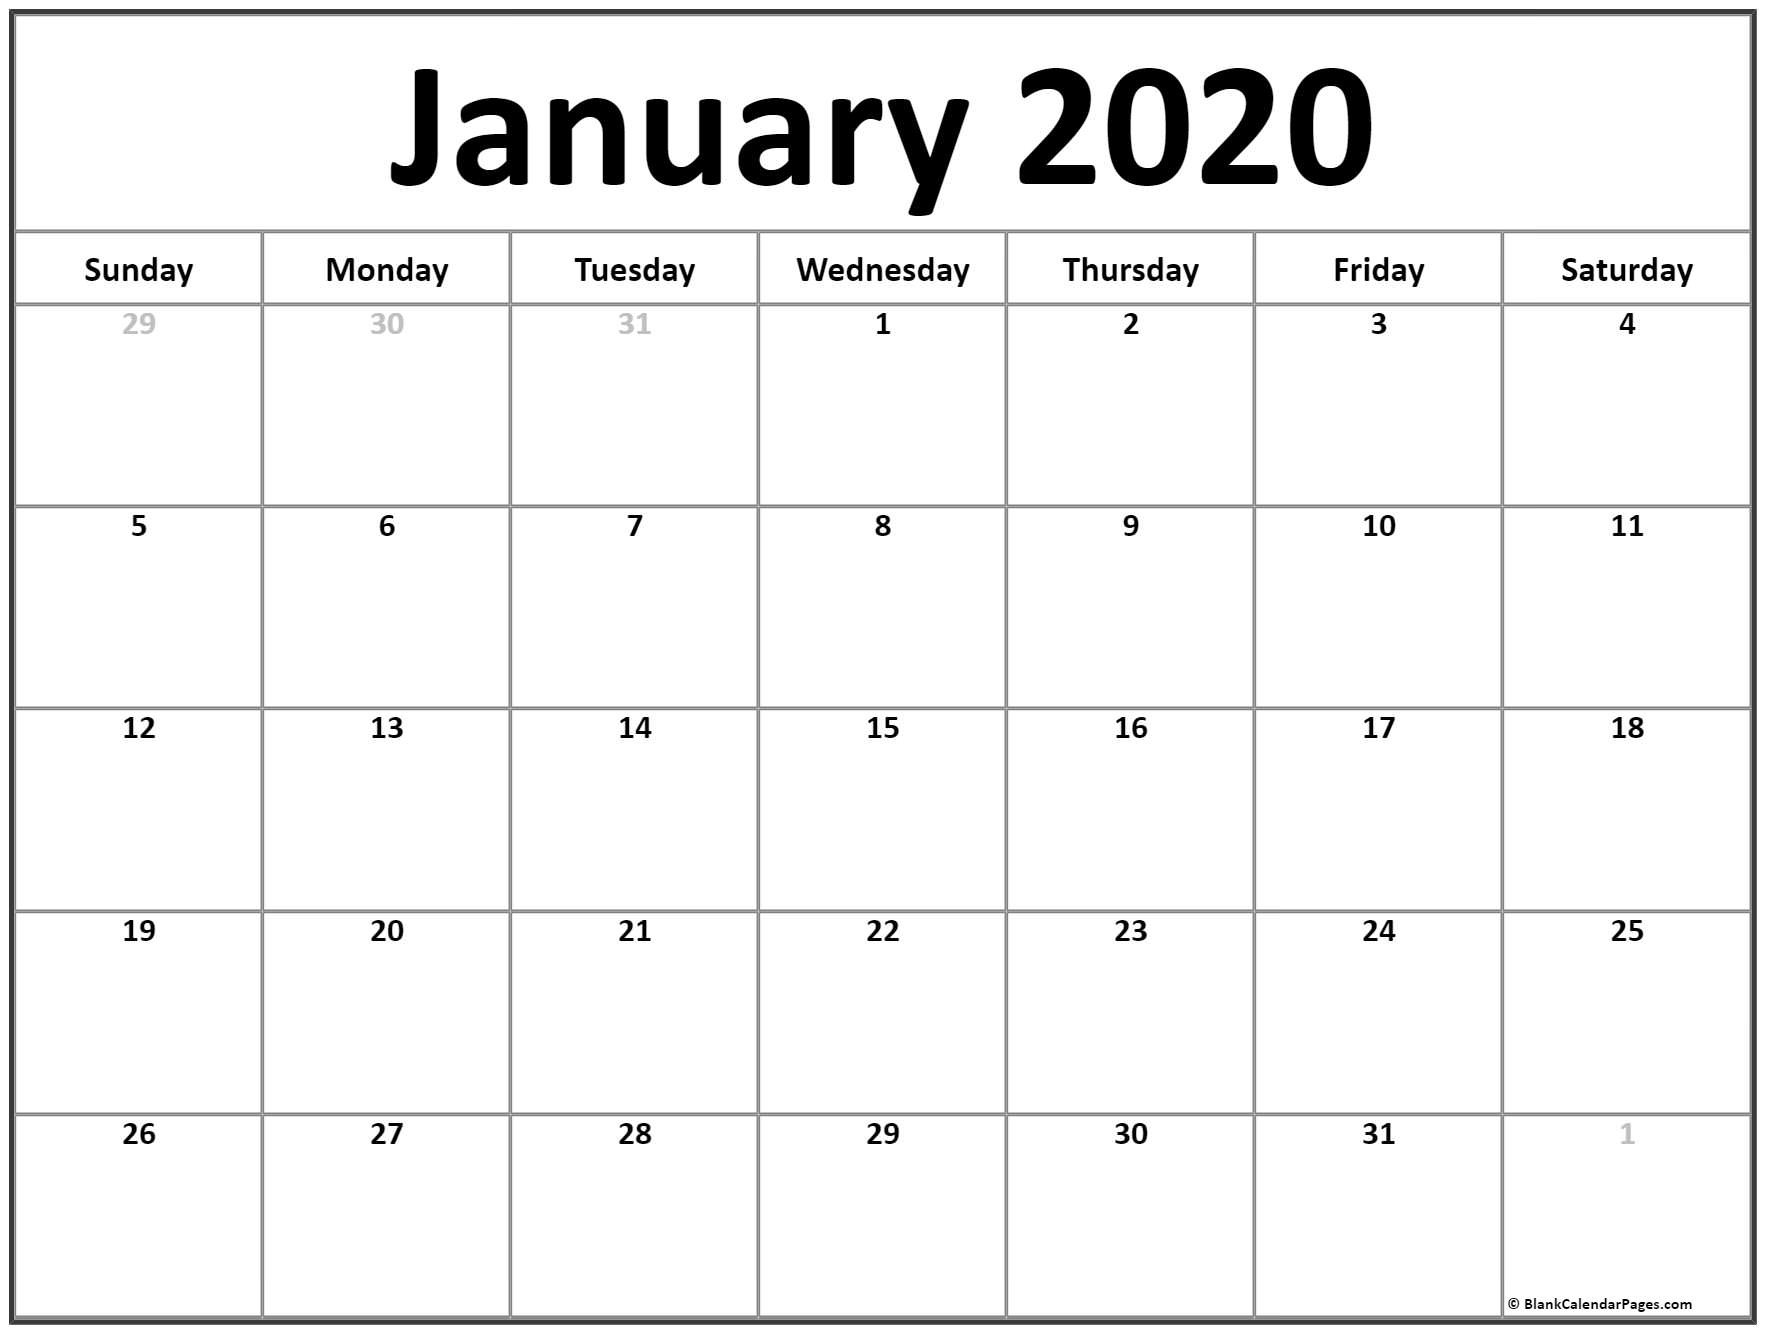 January 2020 Calendar | Free Printable Monthly Calendars-January 2020 Calendar Marriage Dates